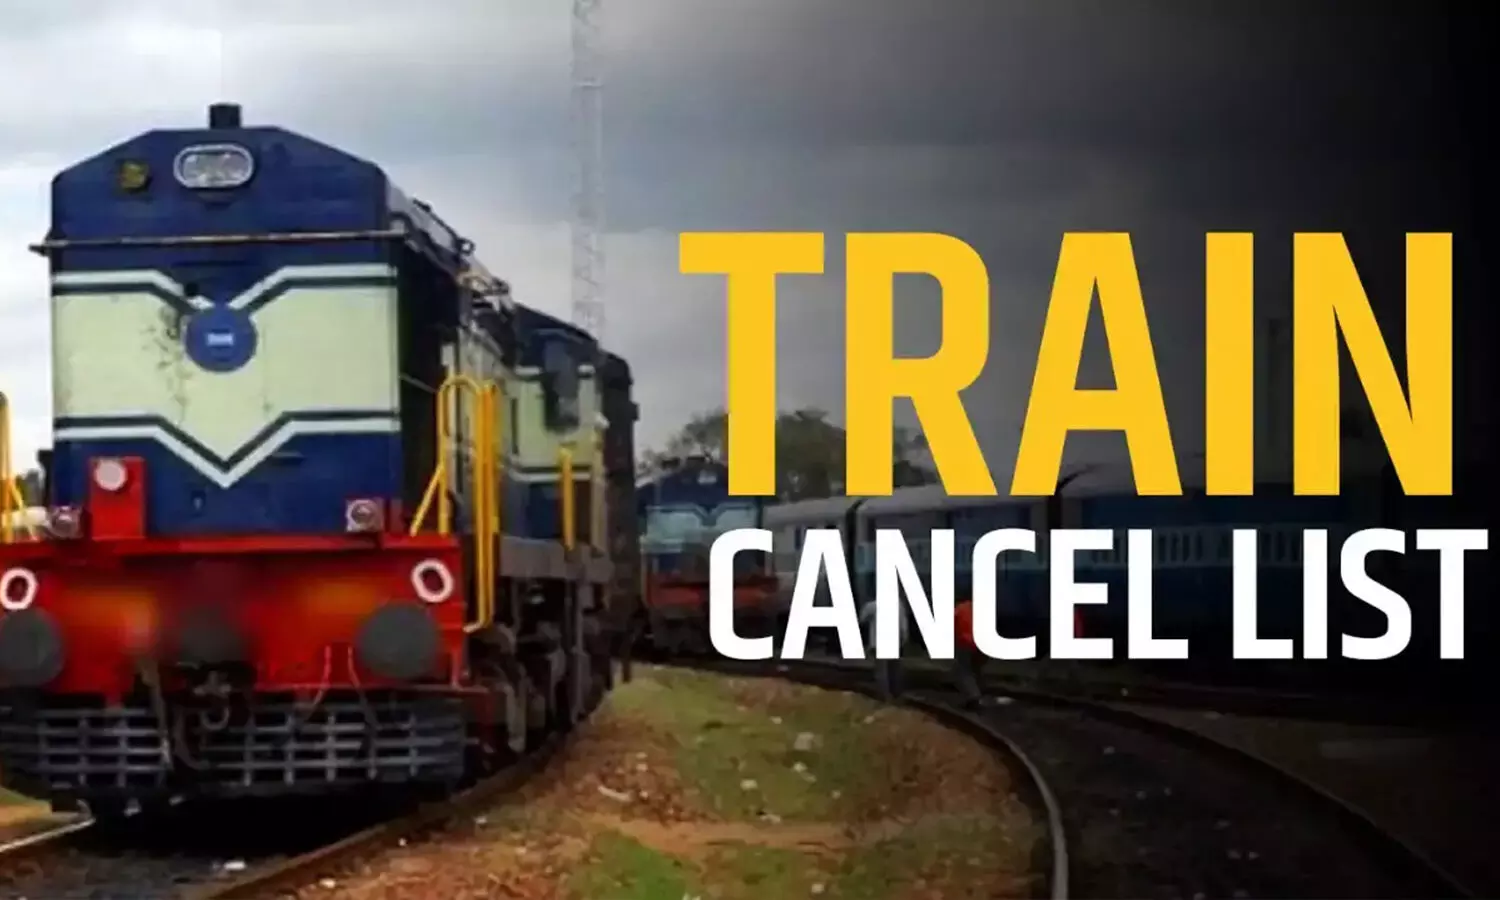 Train Cancel list